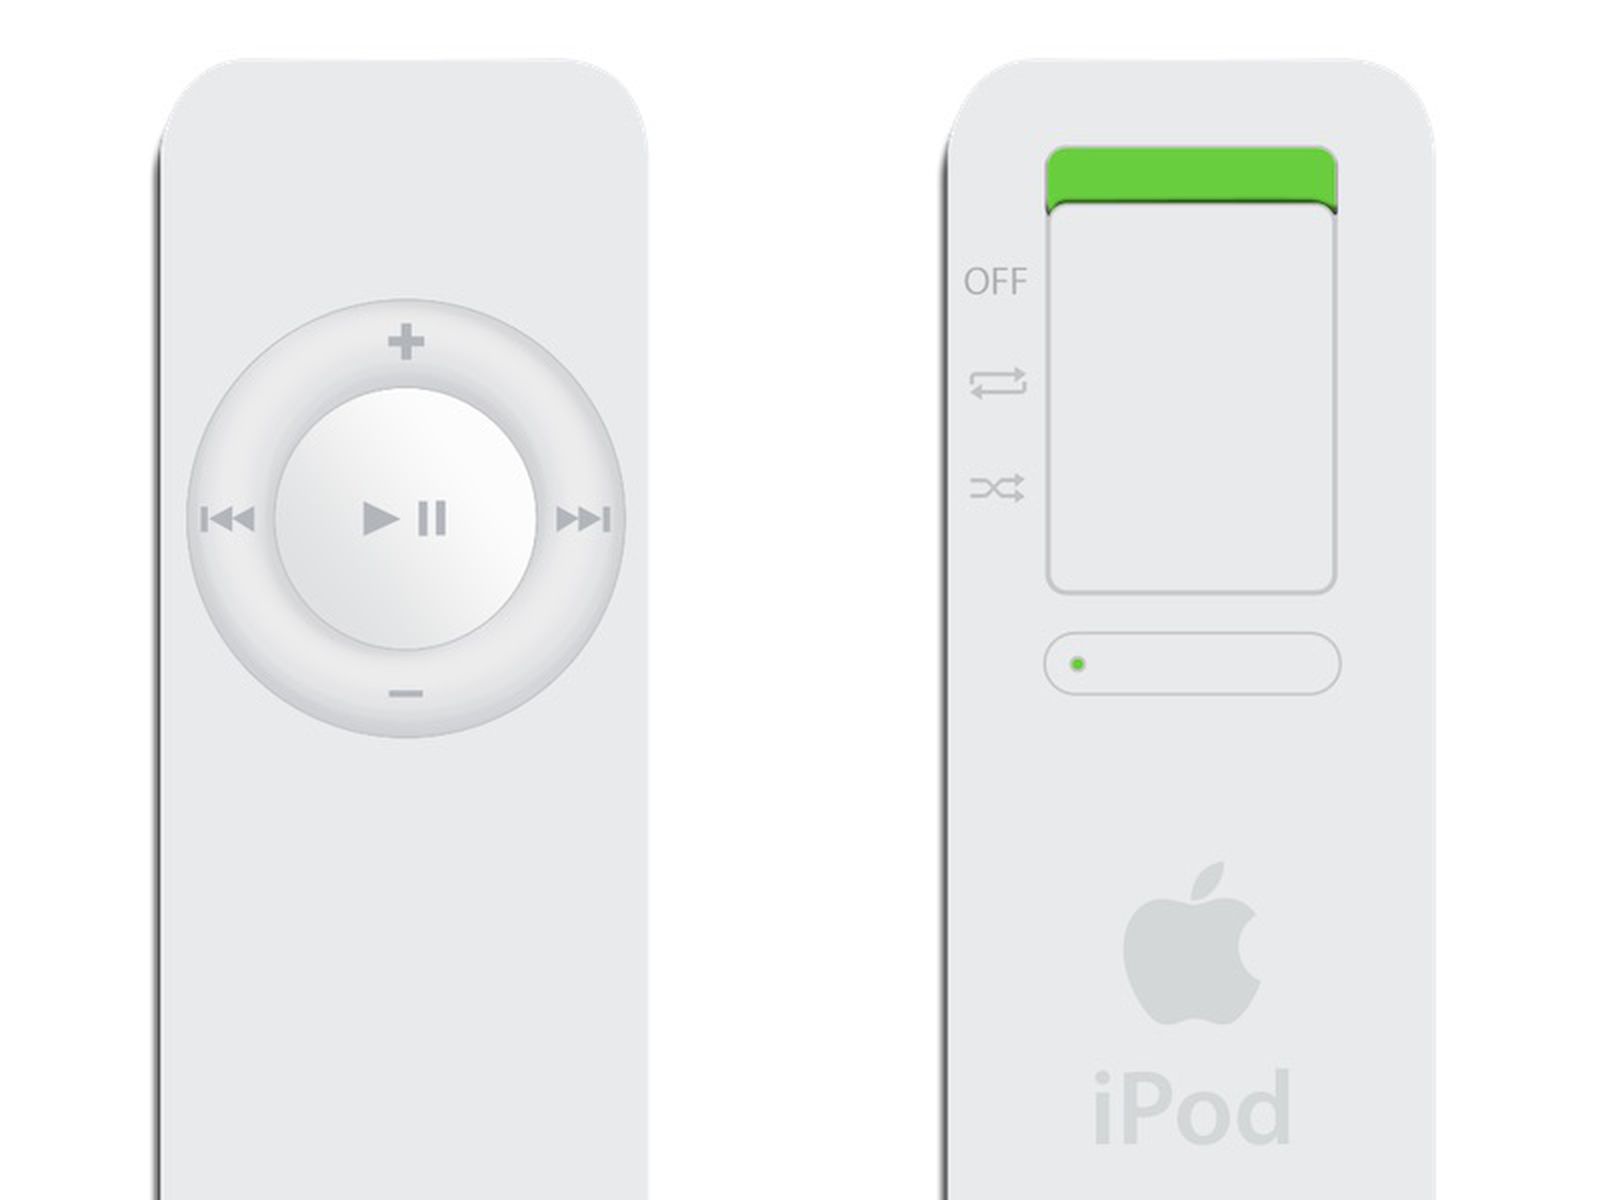 First-Generation iPod Shuffle Turns 14 Today - MacRumors